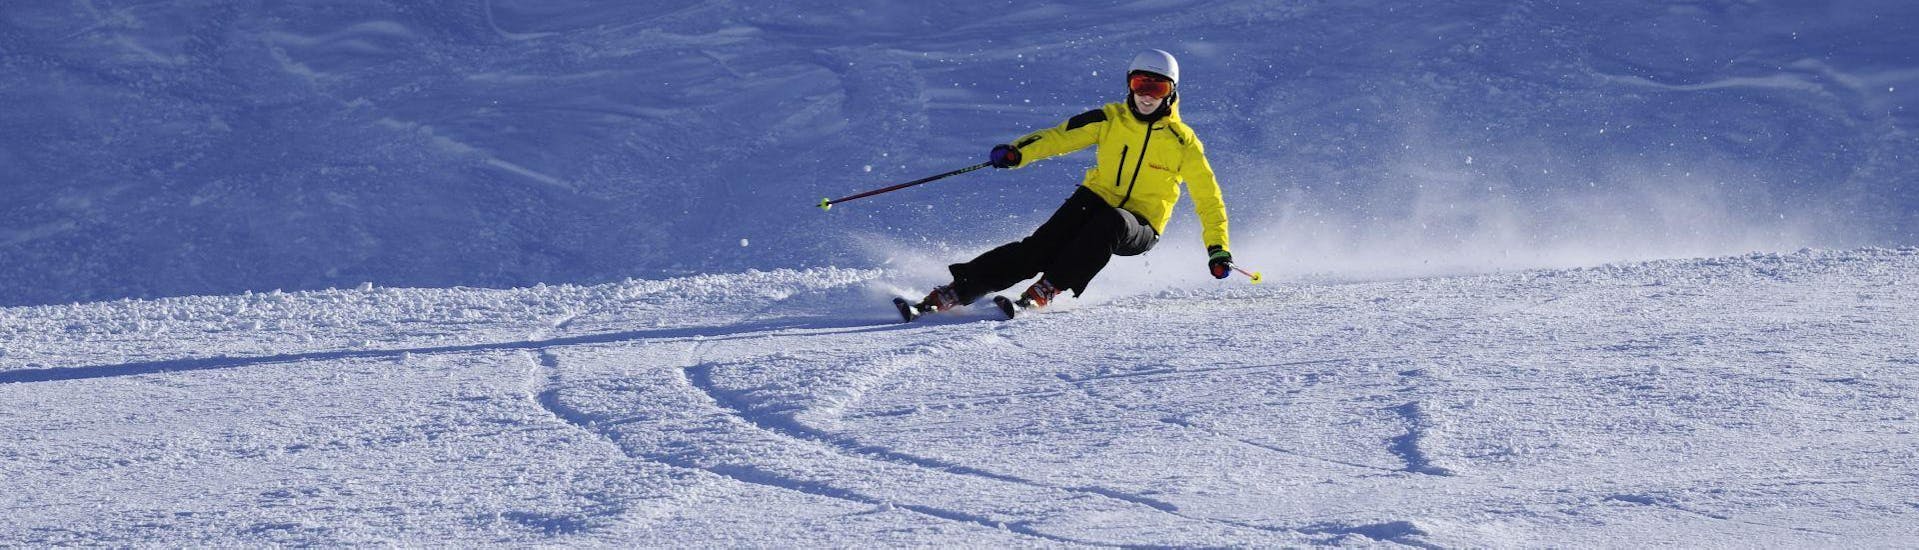 Adult Ski Lessons for Beginners with Skischool Ecki Kober Brauneck-Lenggries - Hero image